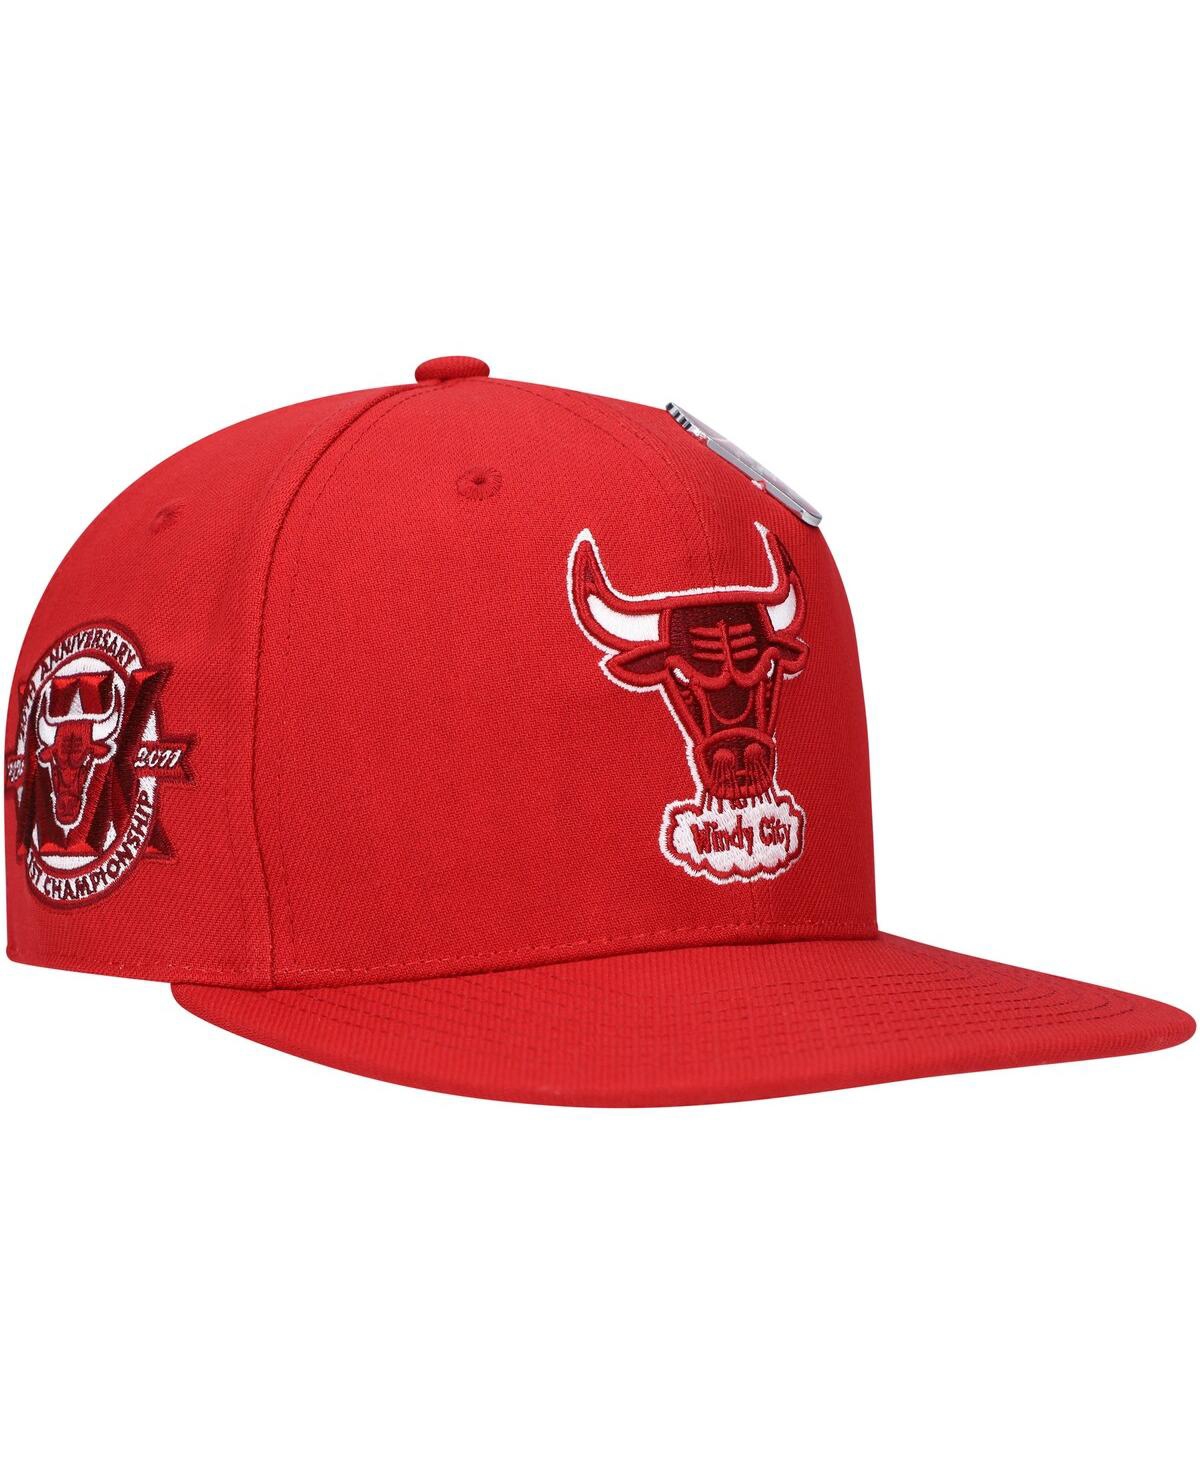 Mitchell & Ness Men's  Red Chicago Bulls Hardwood Classics 20th Anniversary Cherry Bomb Fitted Hat